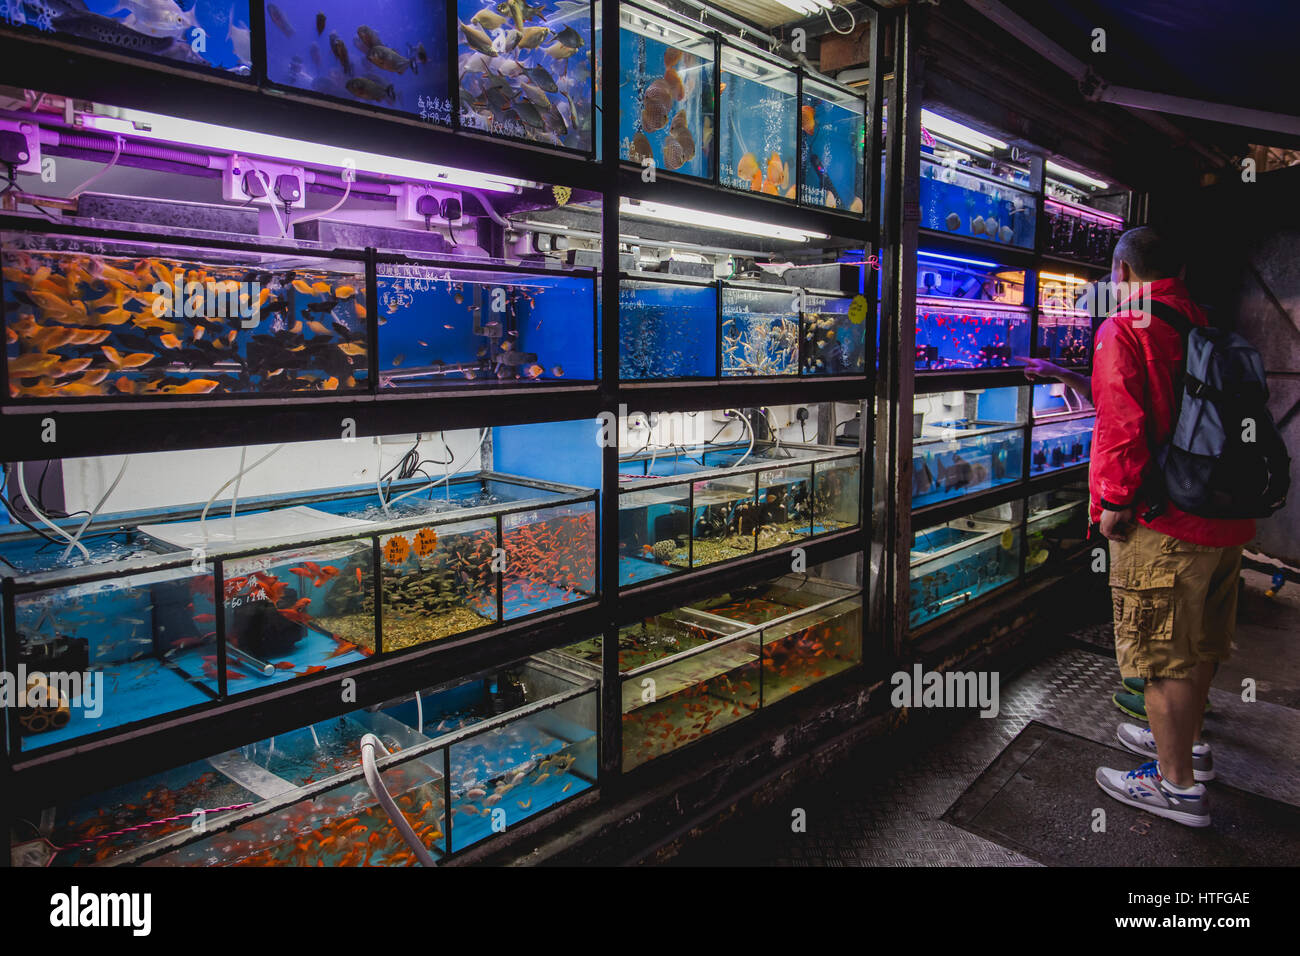 Uomo che guarda un acquario fishesin Tung Choi Street Goldfish Market, hong kong Foto Stock